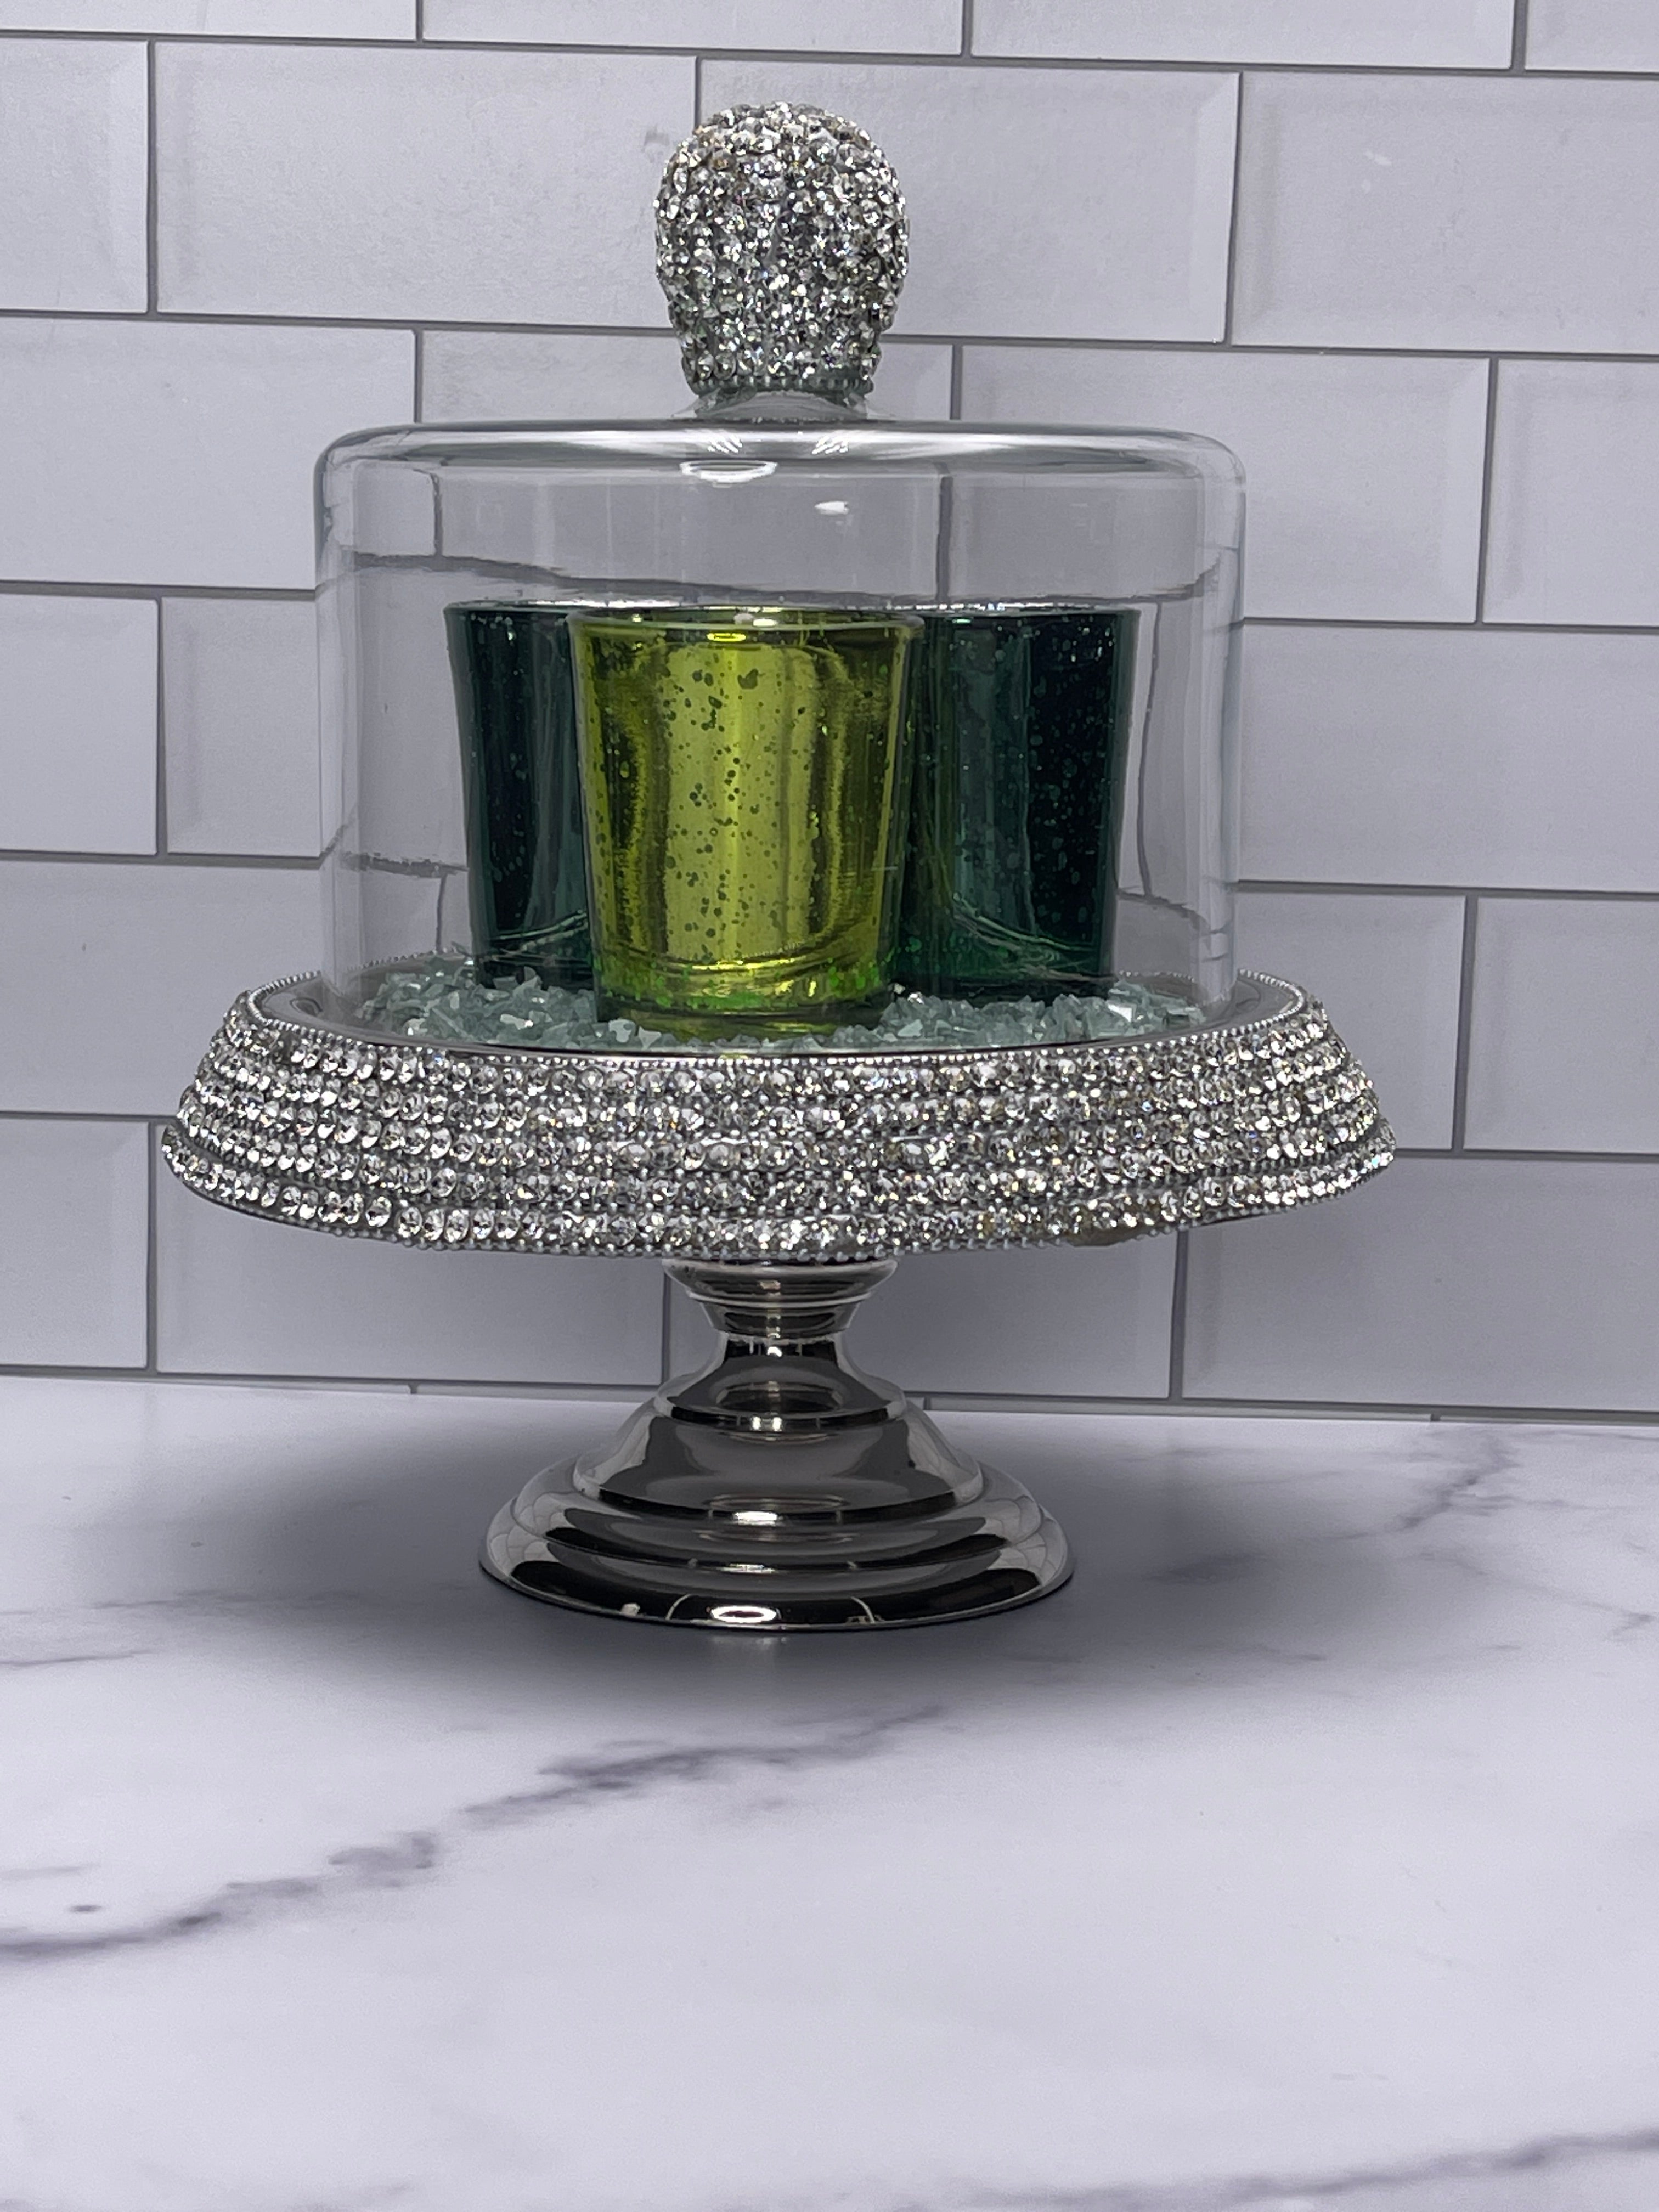 Sparkling Elegance: Dome Platter with Votive Candles"